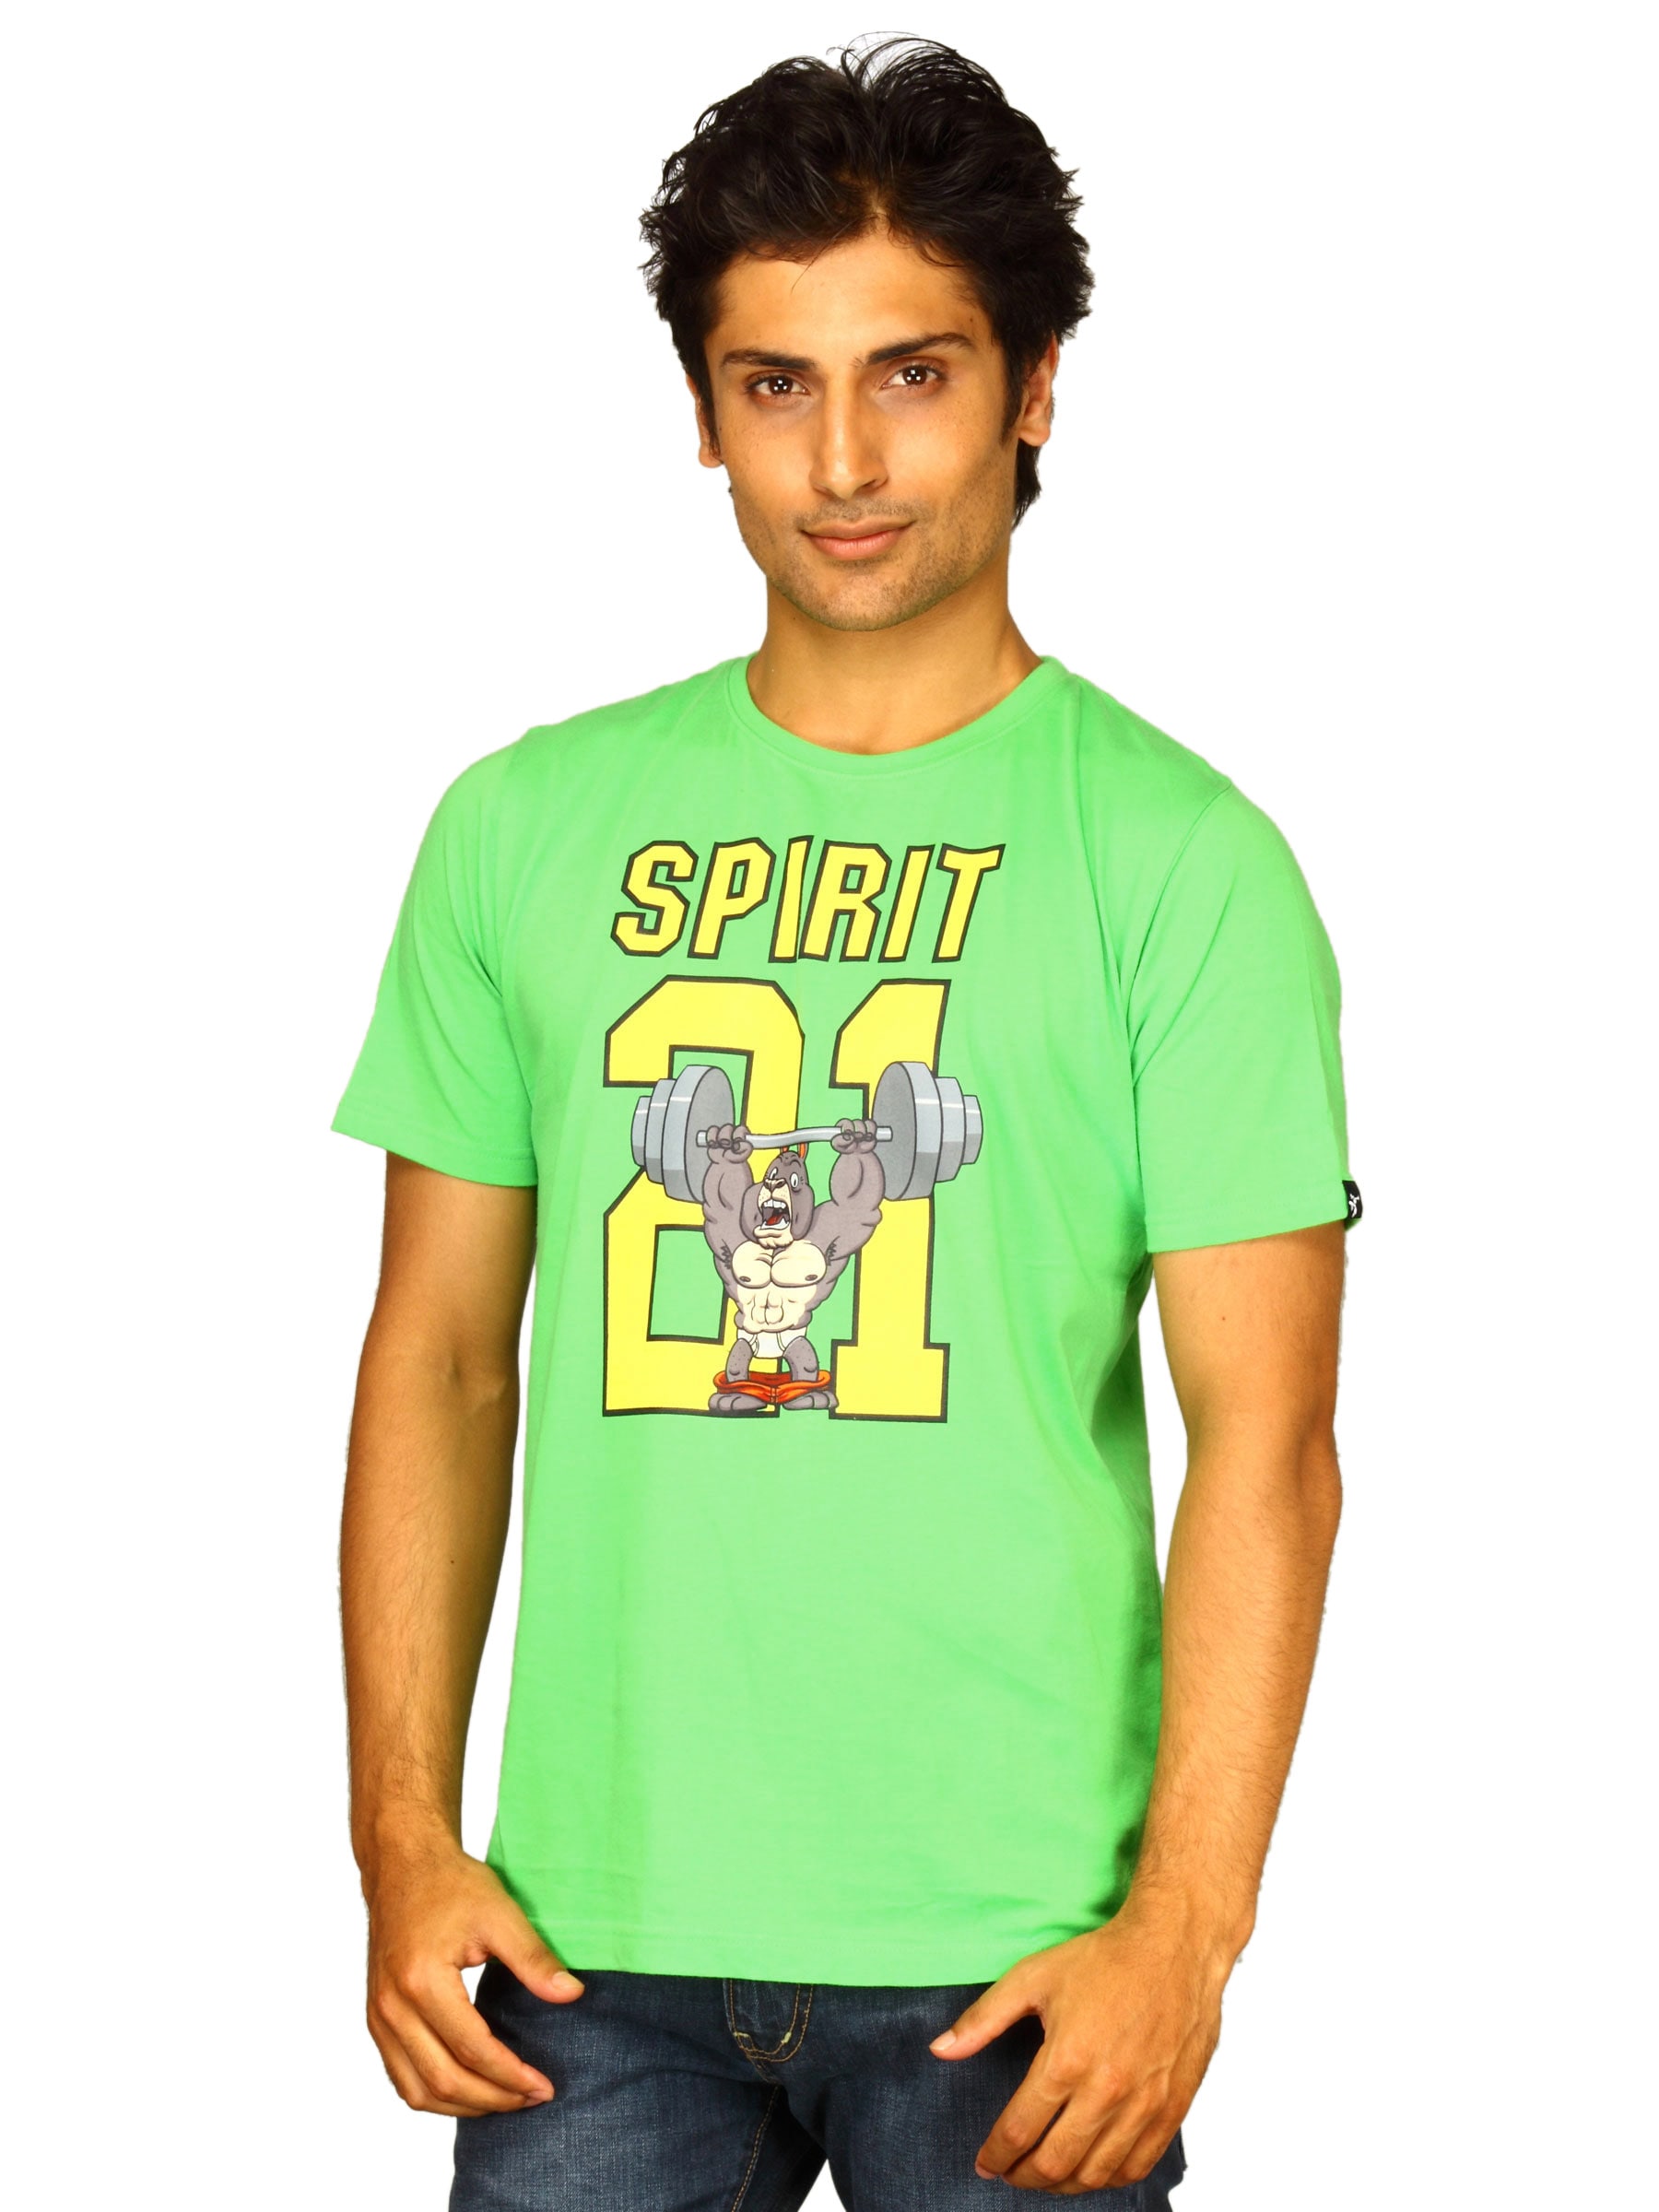 Probase Men's Spirit Green T-shirt